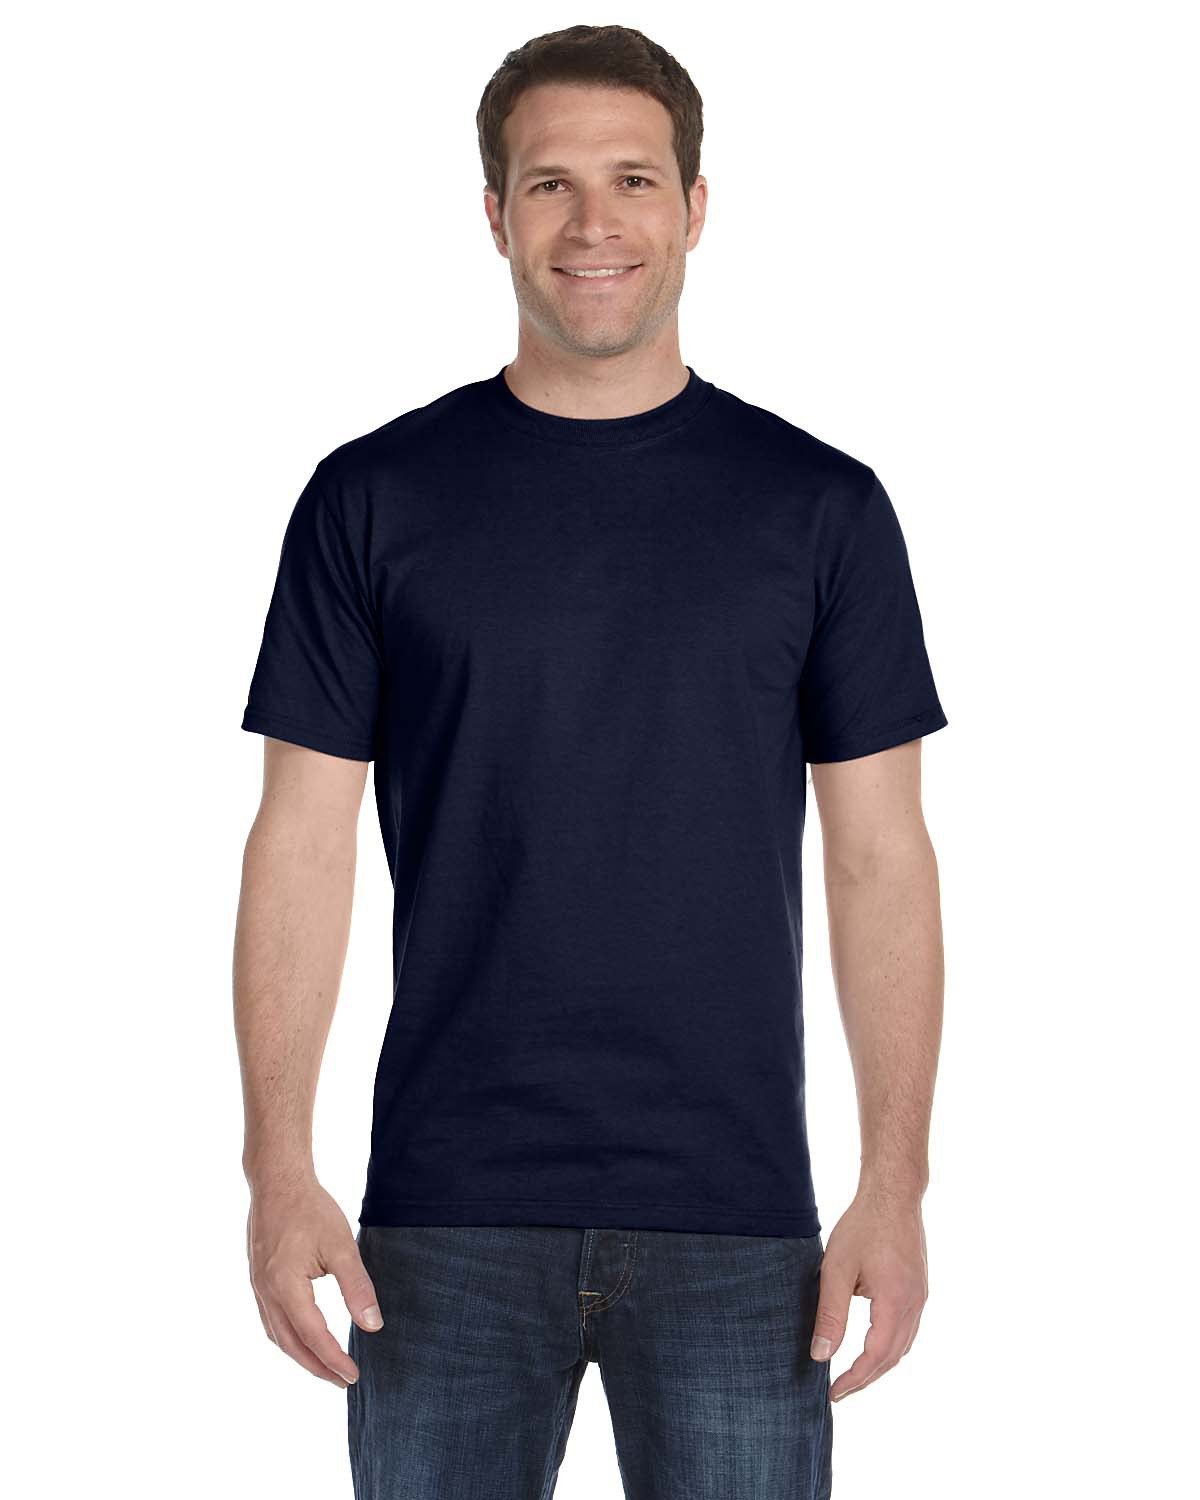 Hanes Adult Essential Short Sleeve T-Shirt navy 